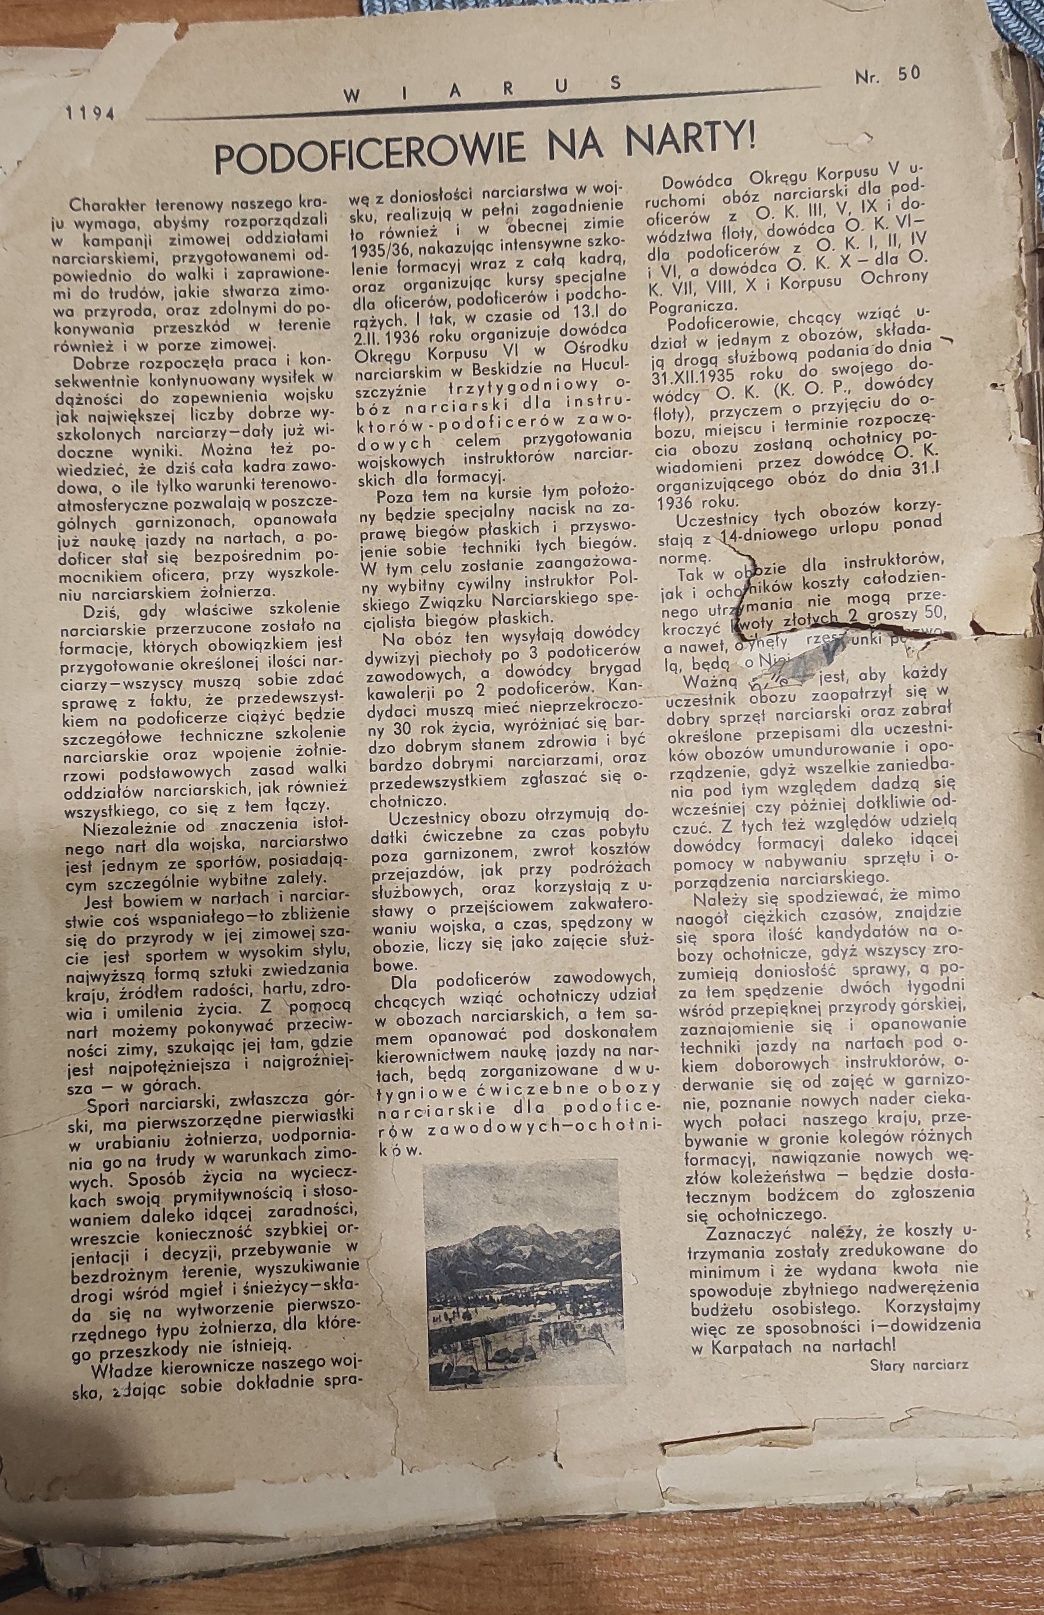 Pismo satyryczne Mucha rok 1925